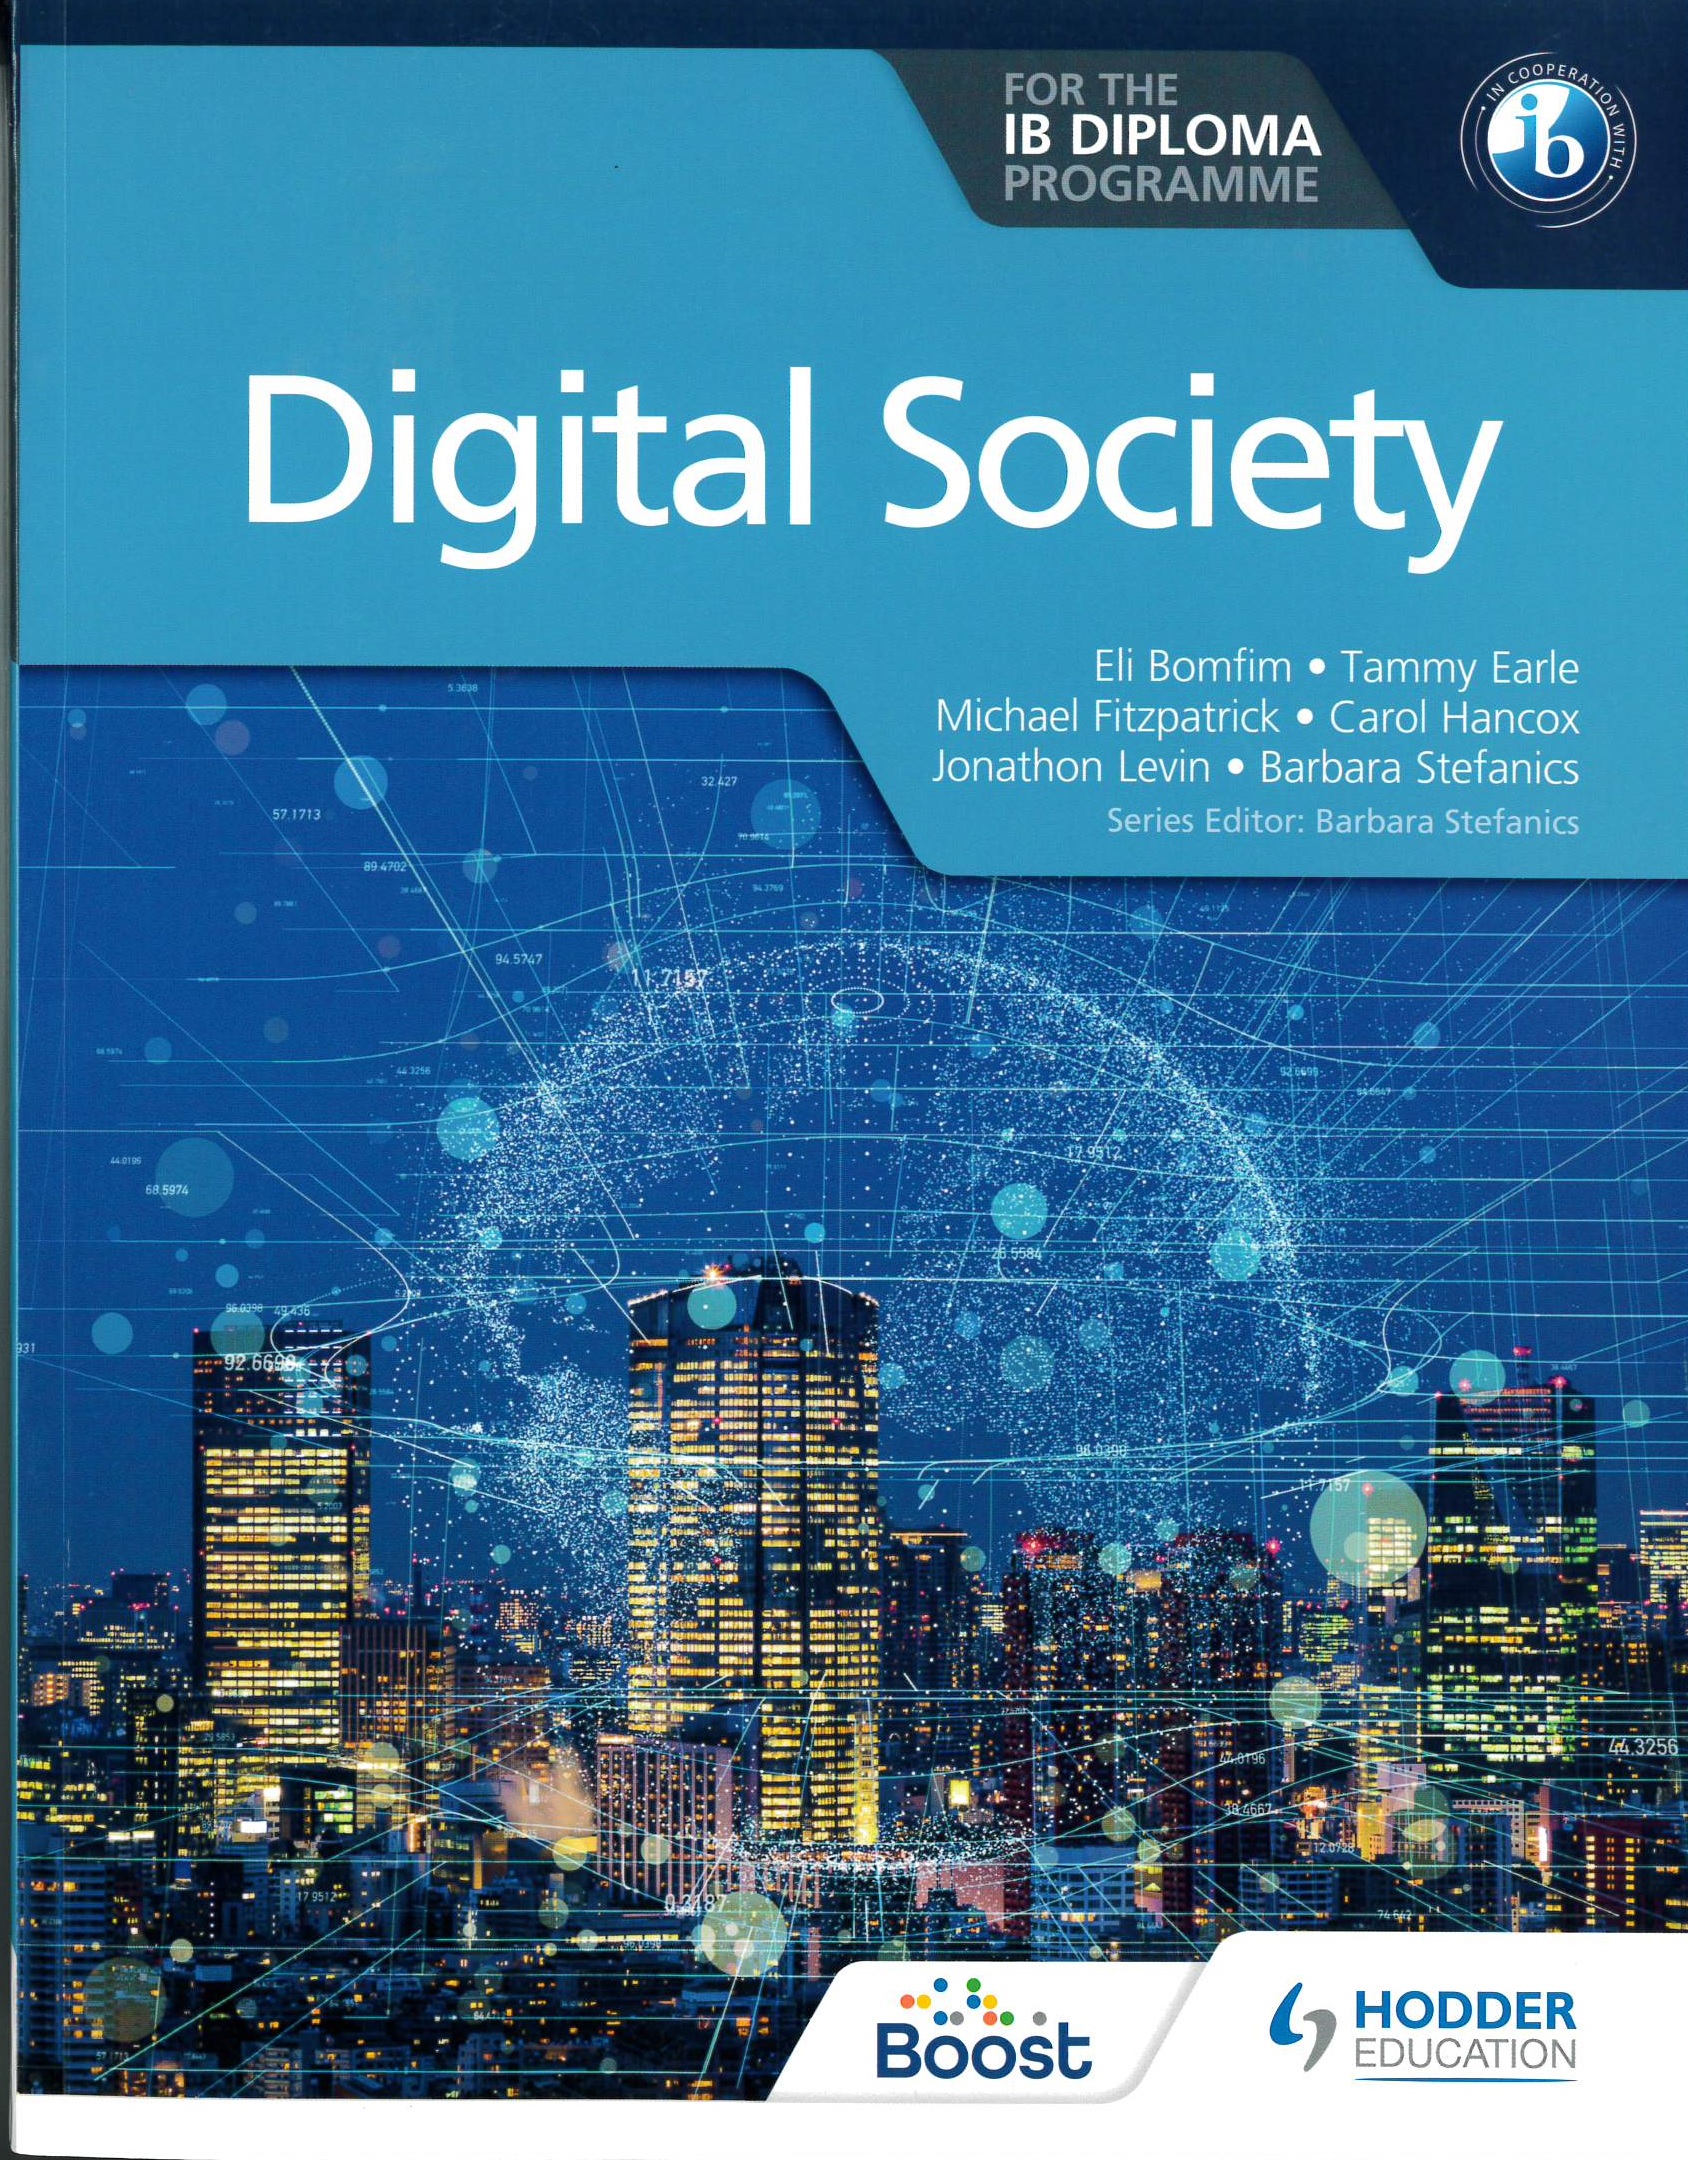 Digital society for the IB diploma programme